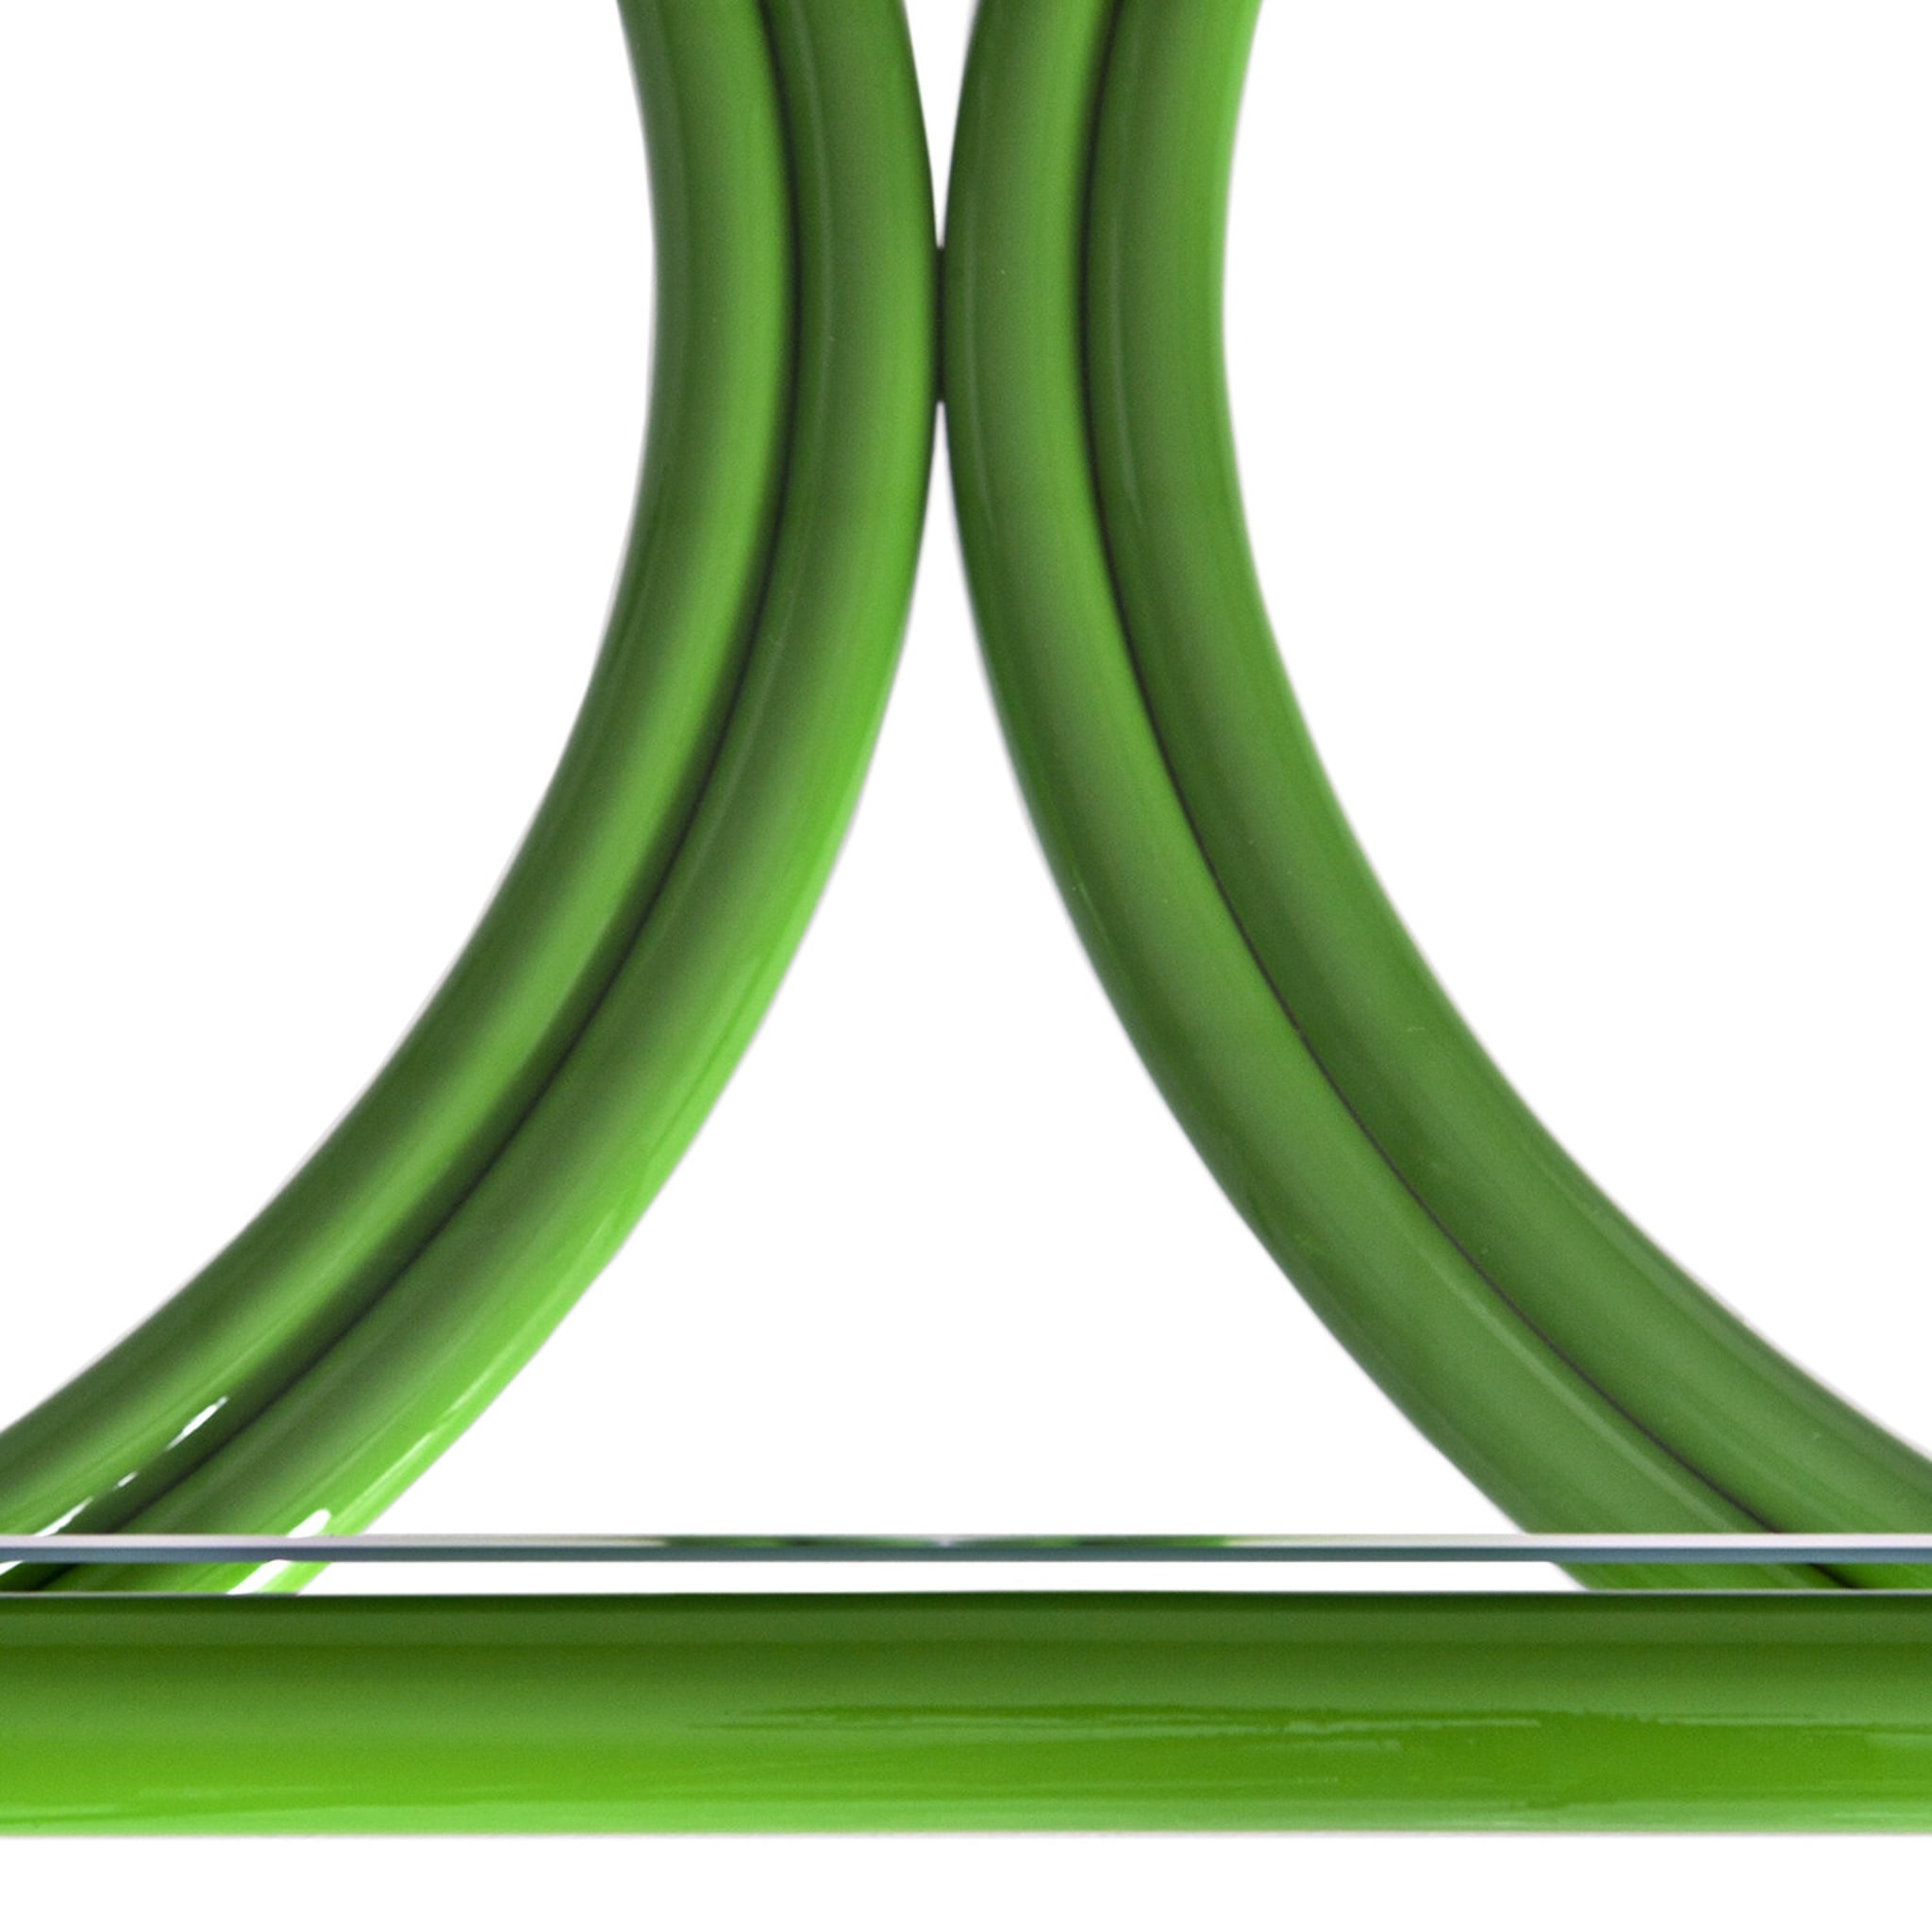 Locus Solus Green Bistro Table by Gae Aulenti - Alternative view 2